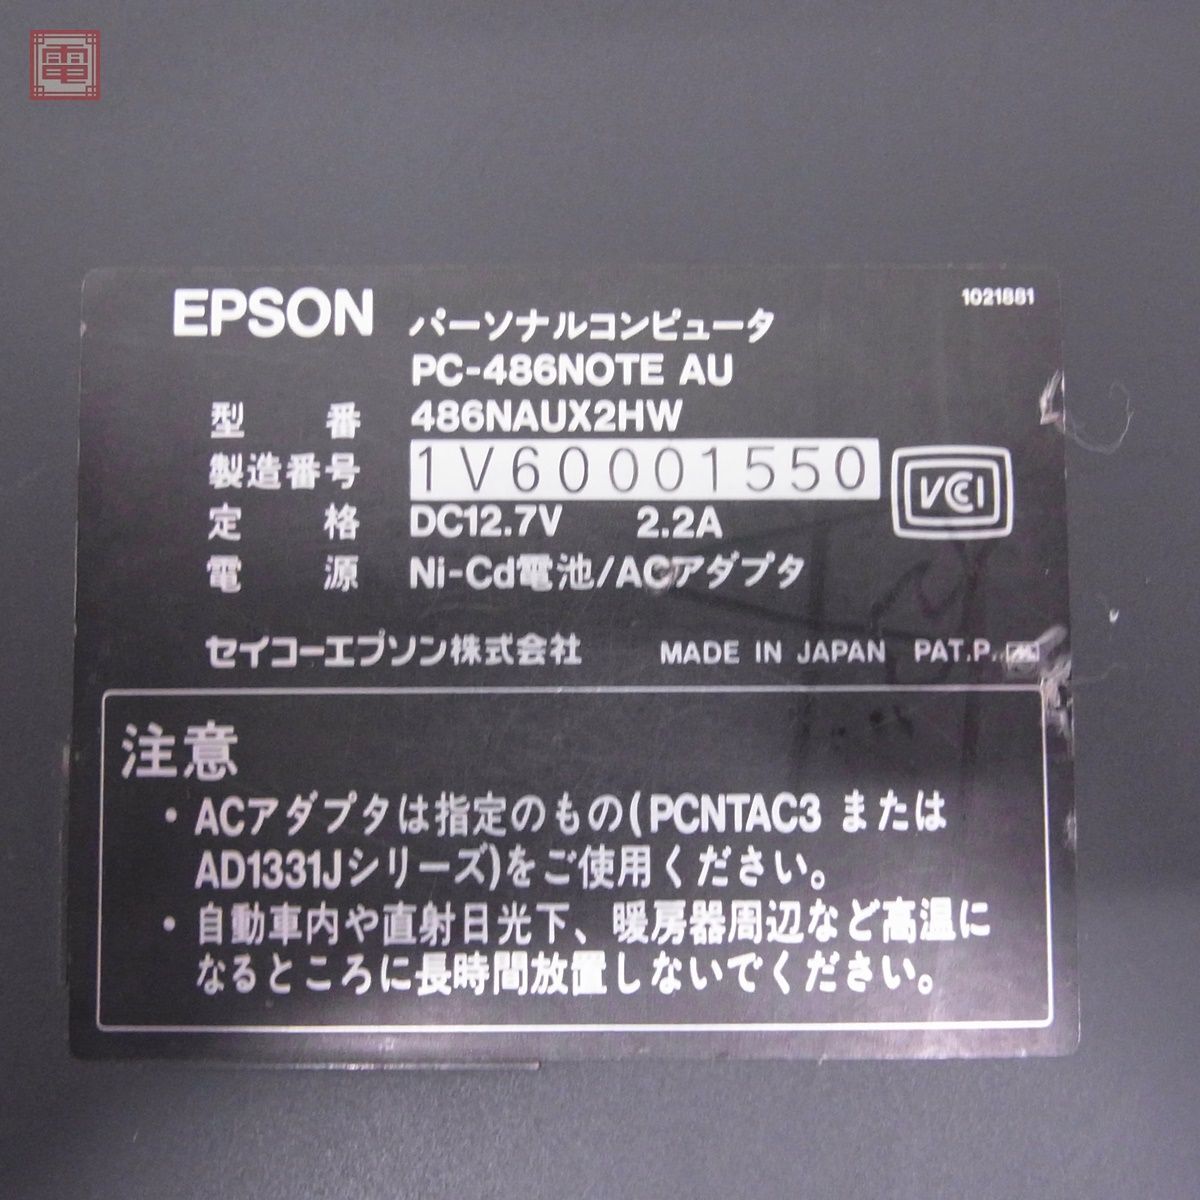 EPSON PC-486NOTE AU (486NAUX2HW) корпус только HDD нет UG MULTI NOTE Note PC Seiko Epson Junk детали брать .. пожалуйста [20